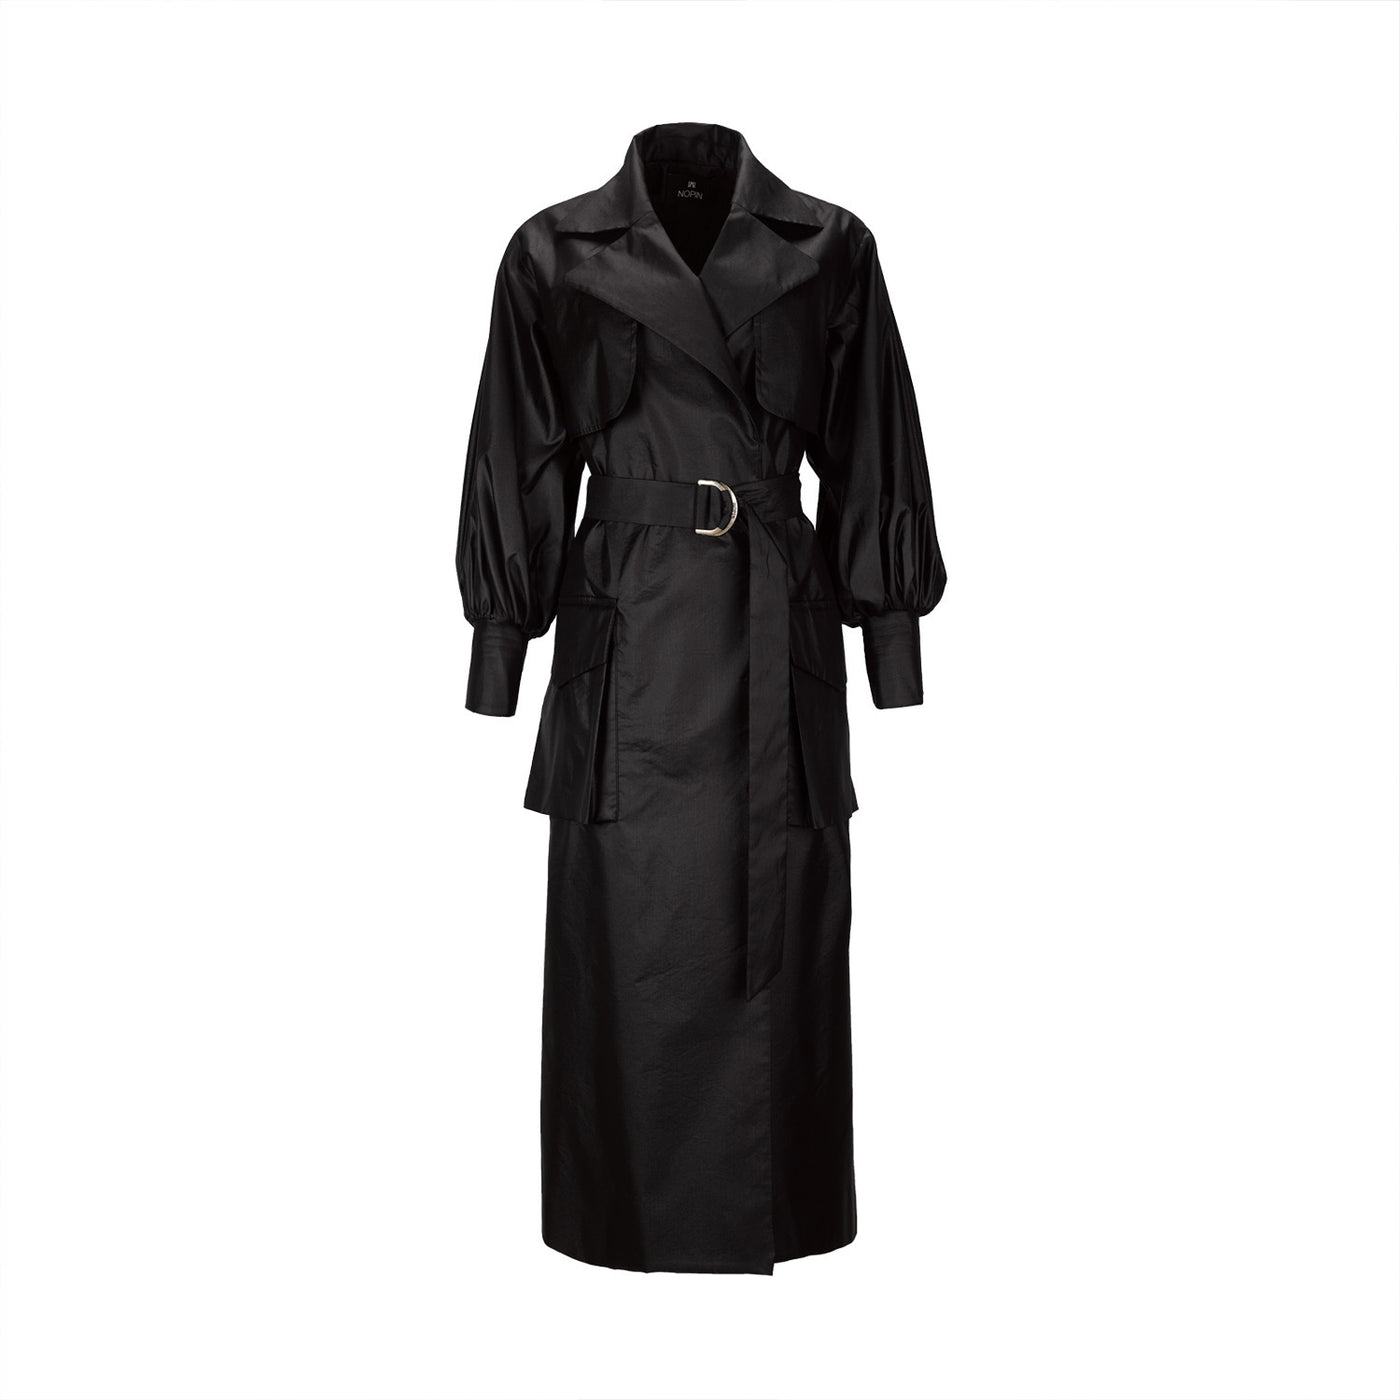 Black Oversized Trench Coat with Belt